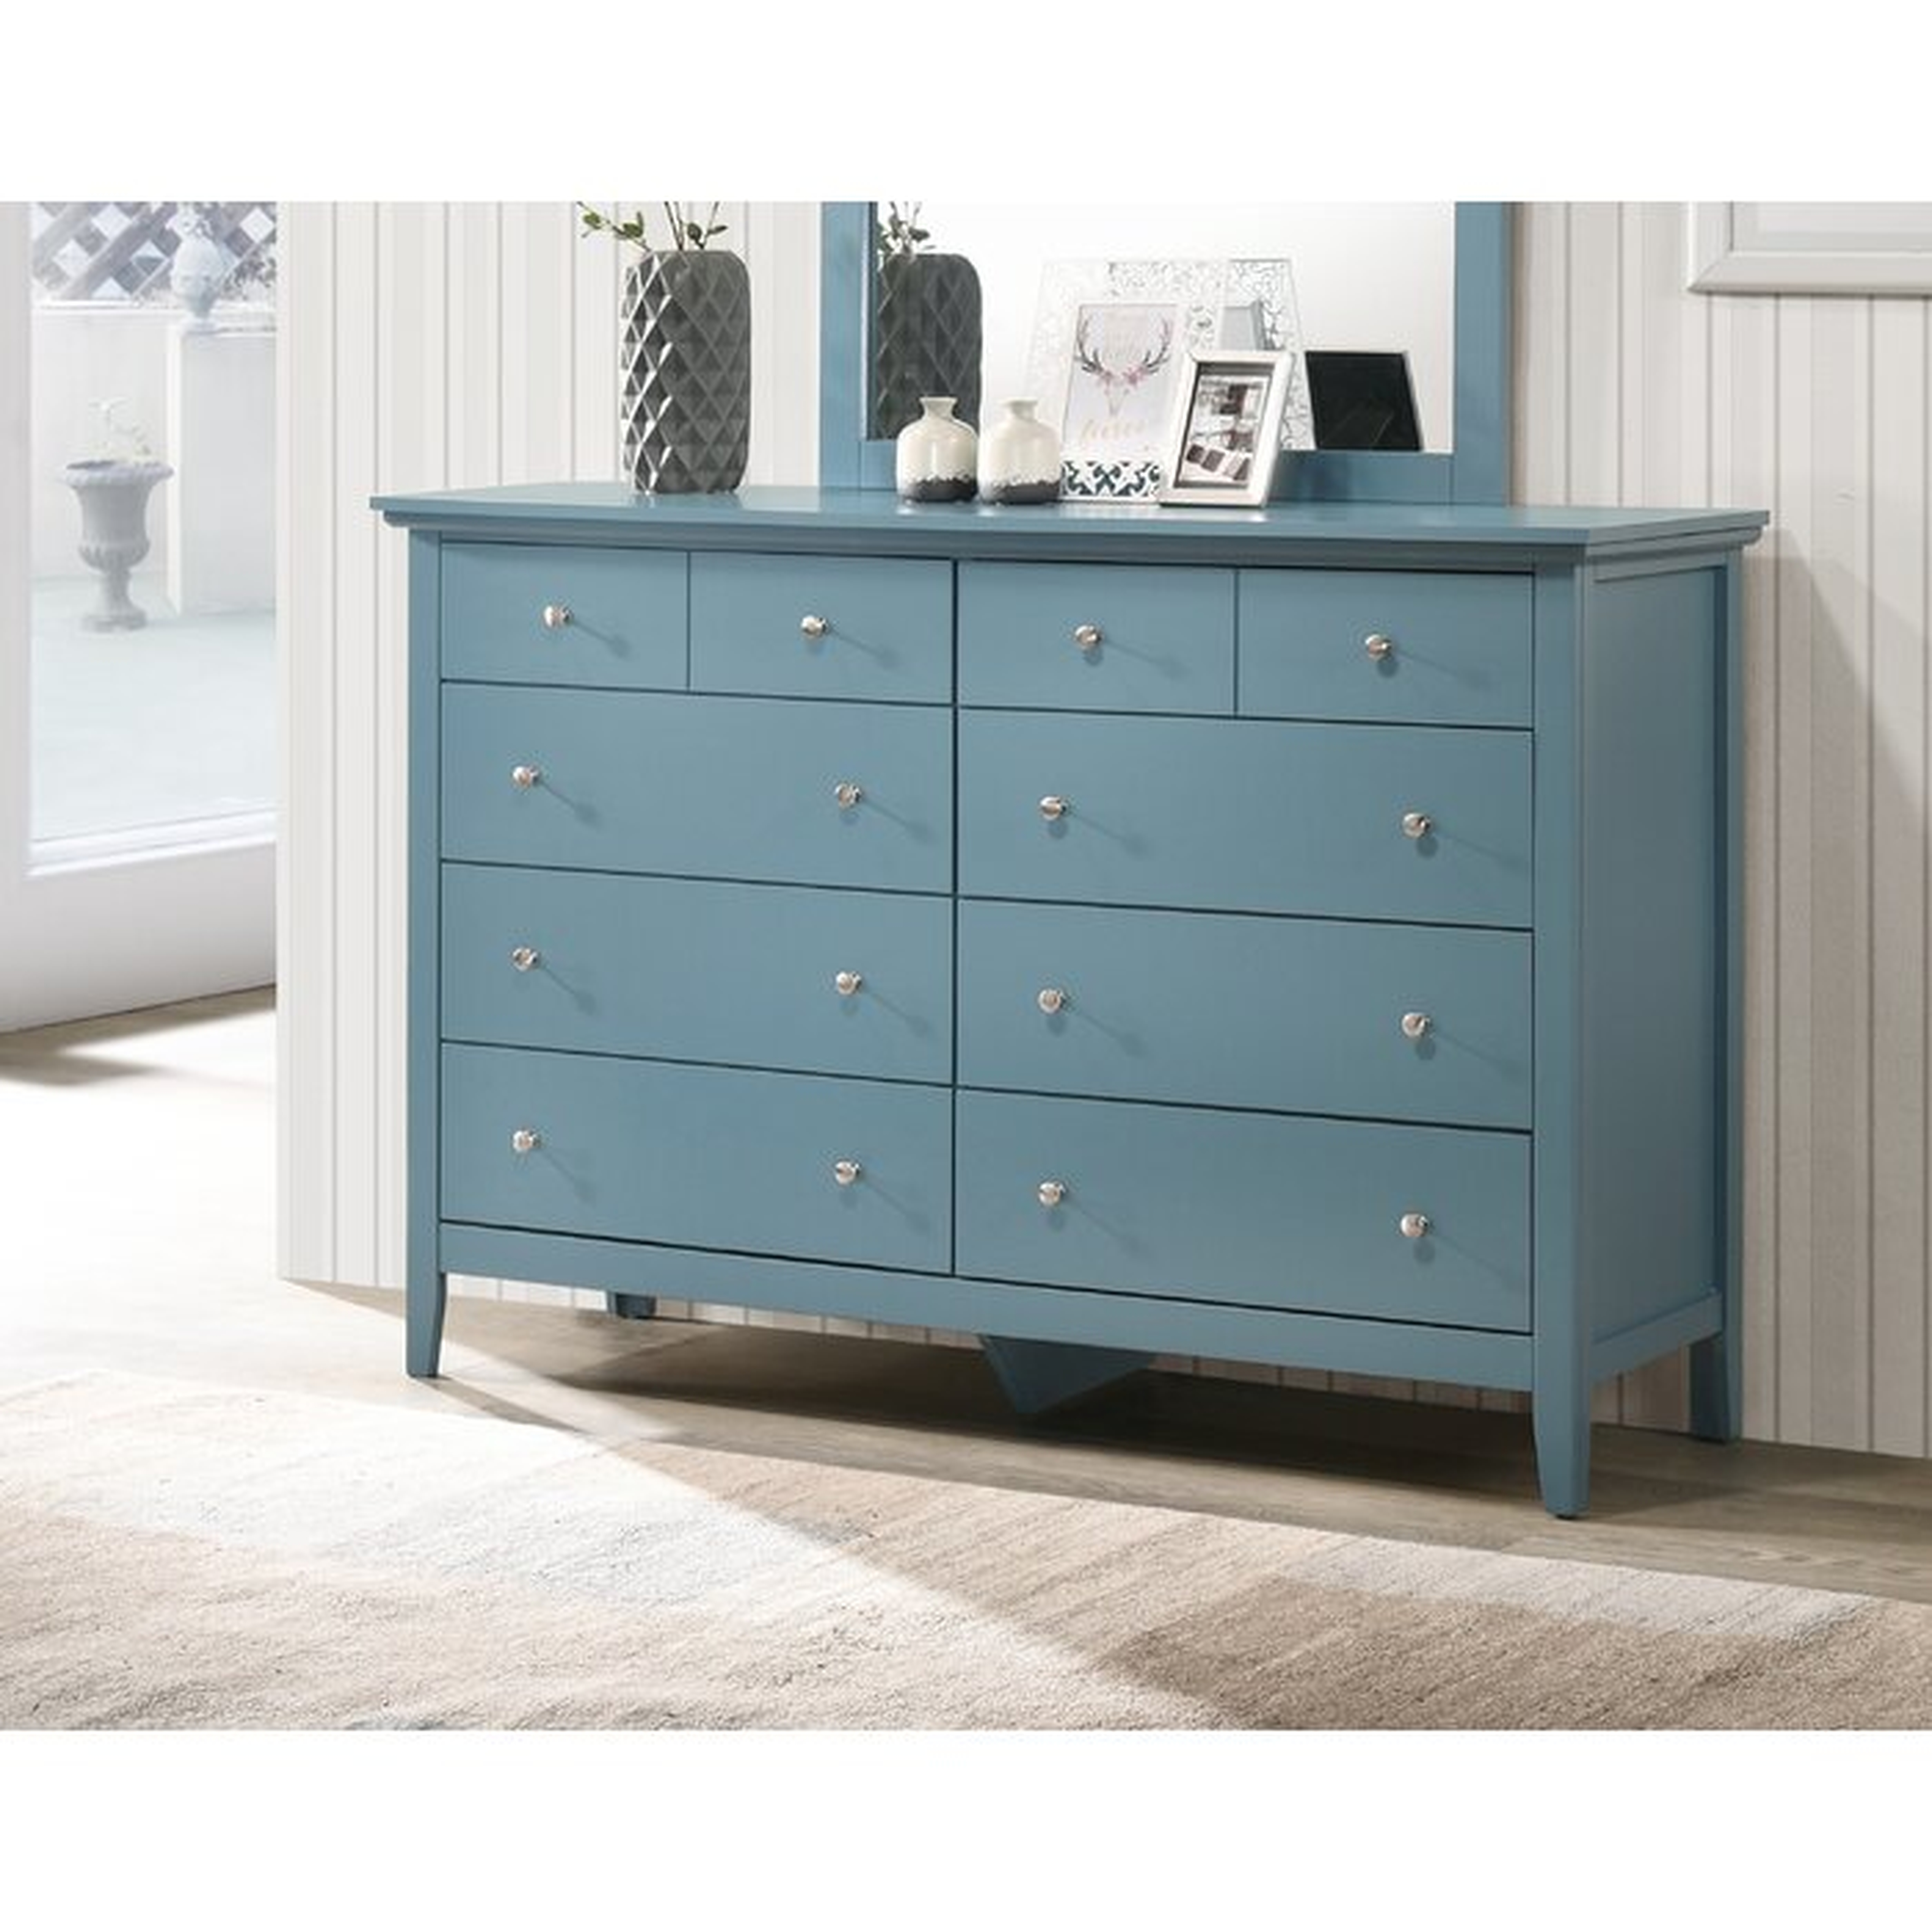 Sonja 8 Drawer Double Dresser, Teal Blue - Wayfair